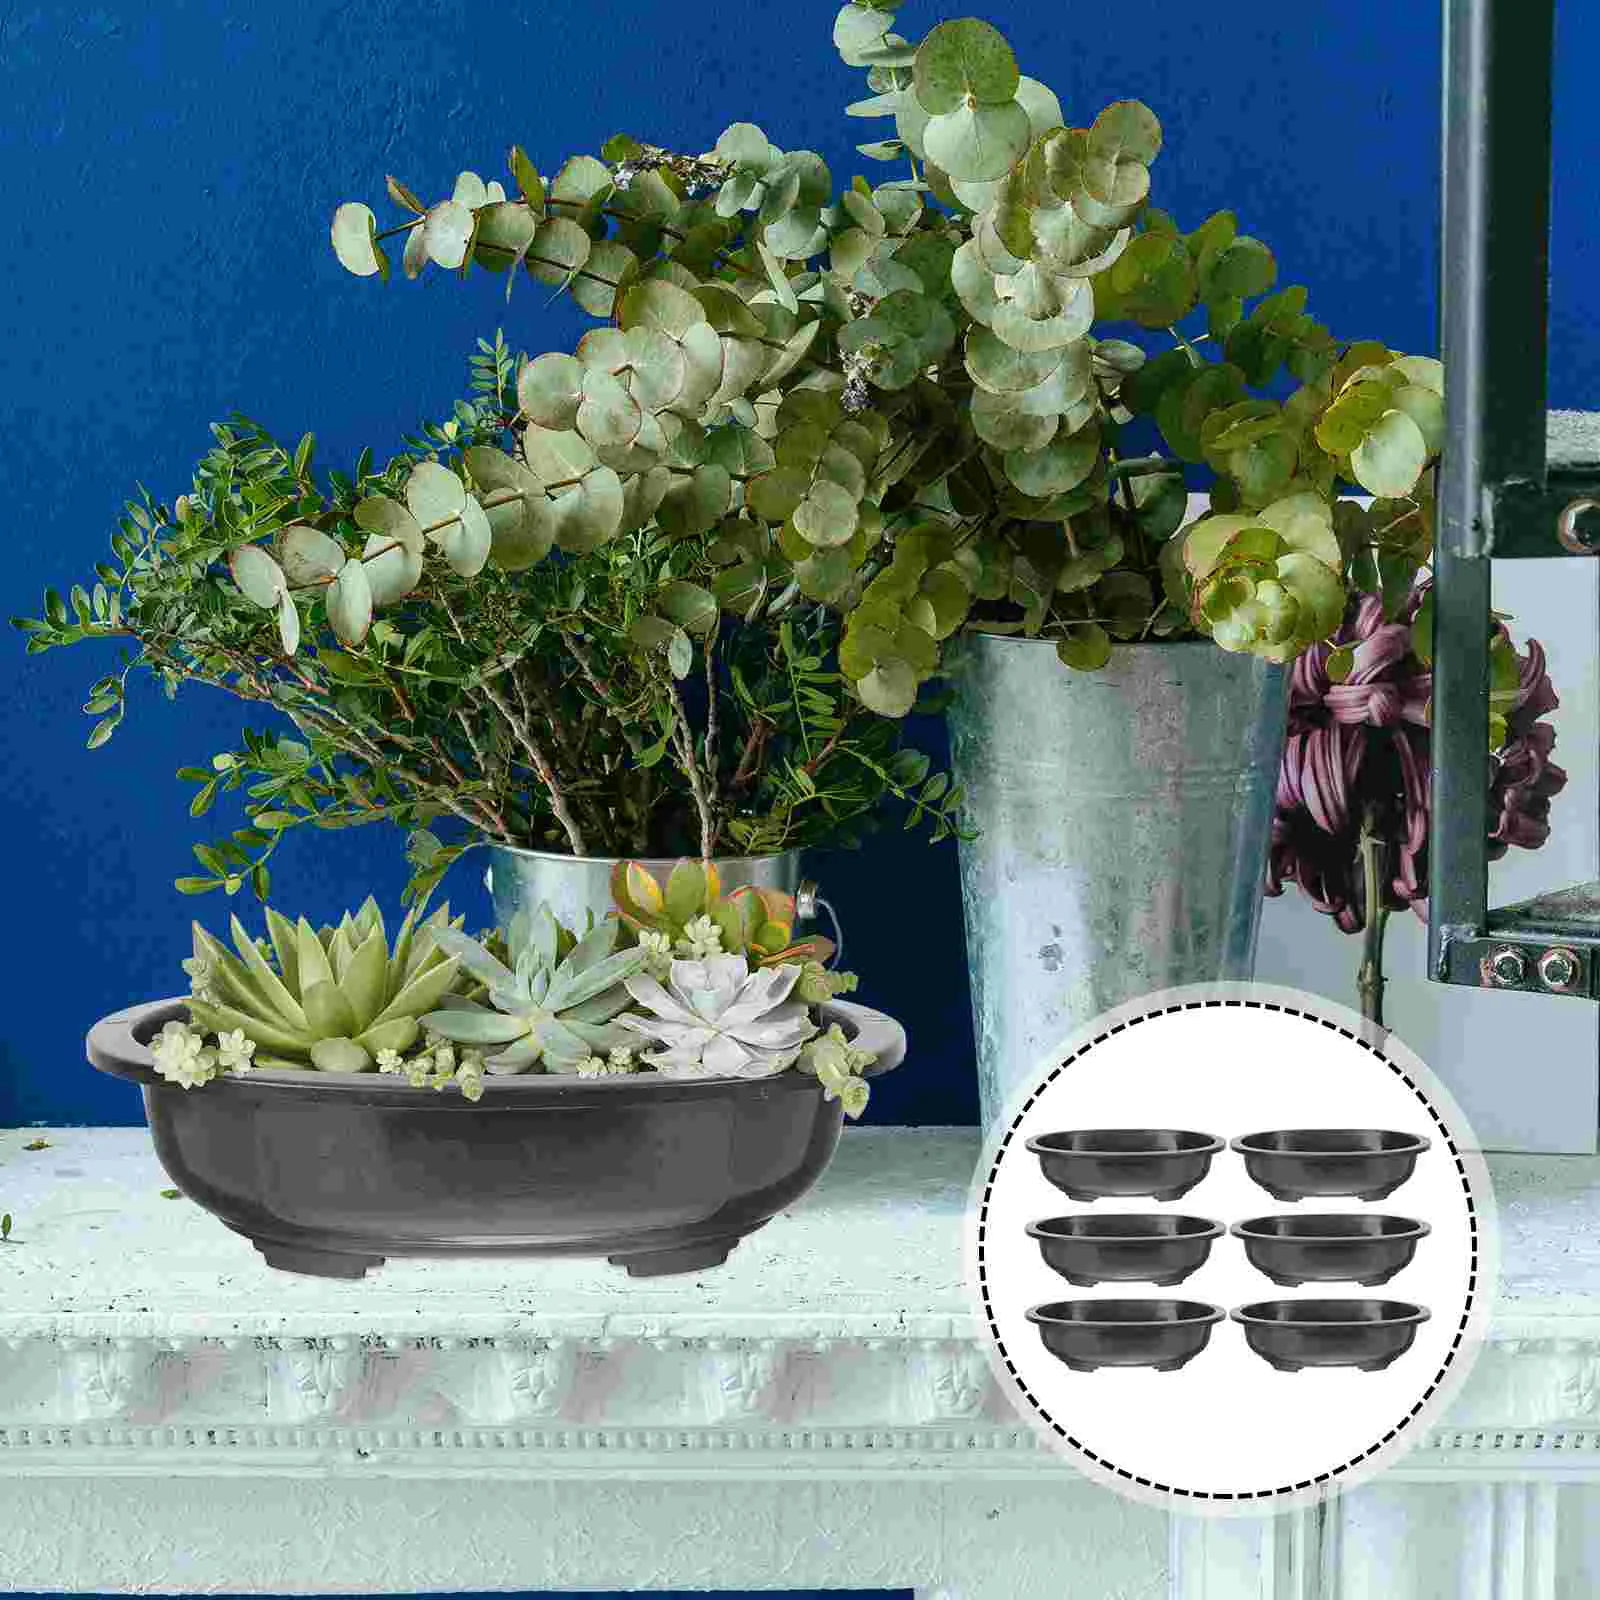 

6pcs indoor plants saucer planter drip trays flower pot pallet for indoor outdoor flower pots and pot planters gardening pots,